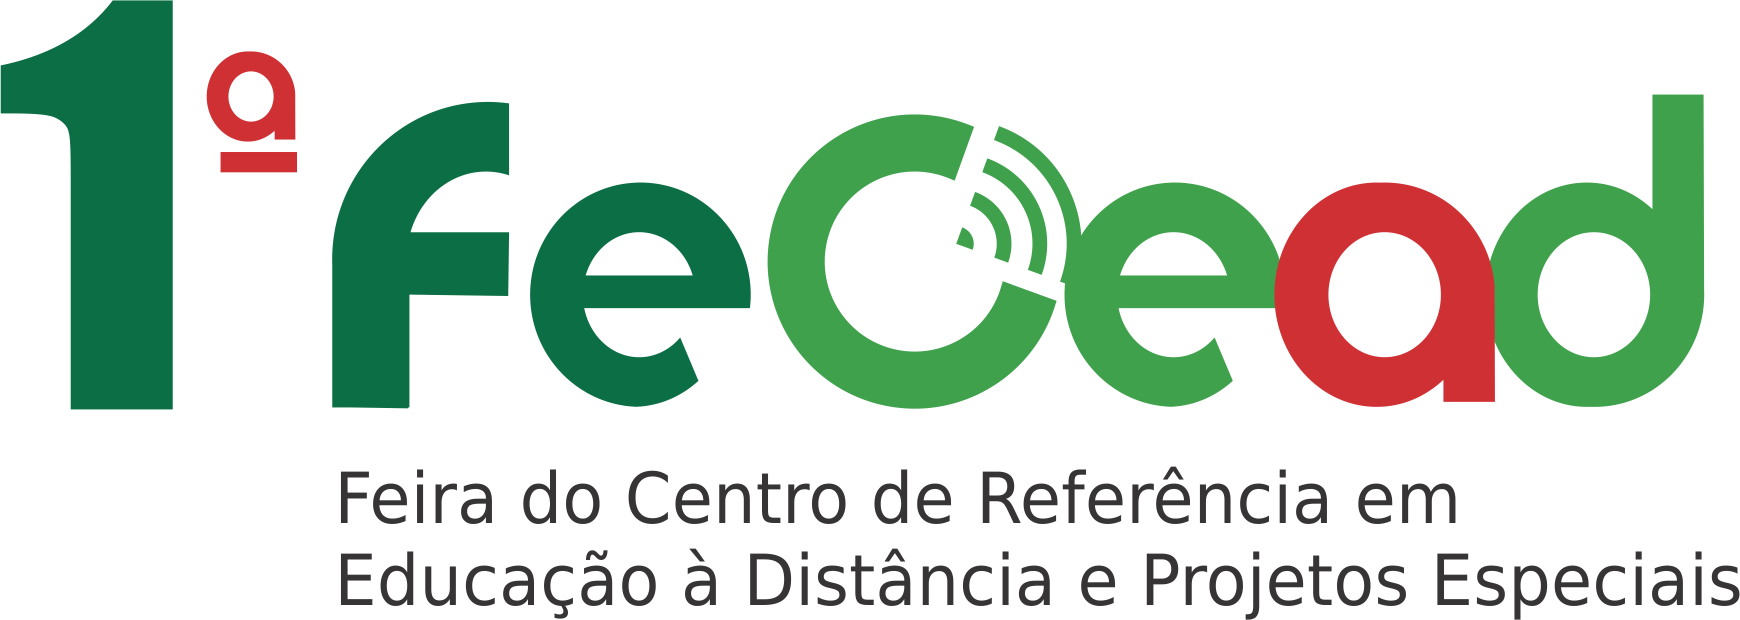 Logo FECEAD 1